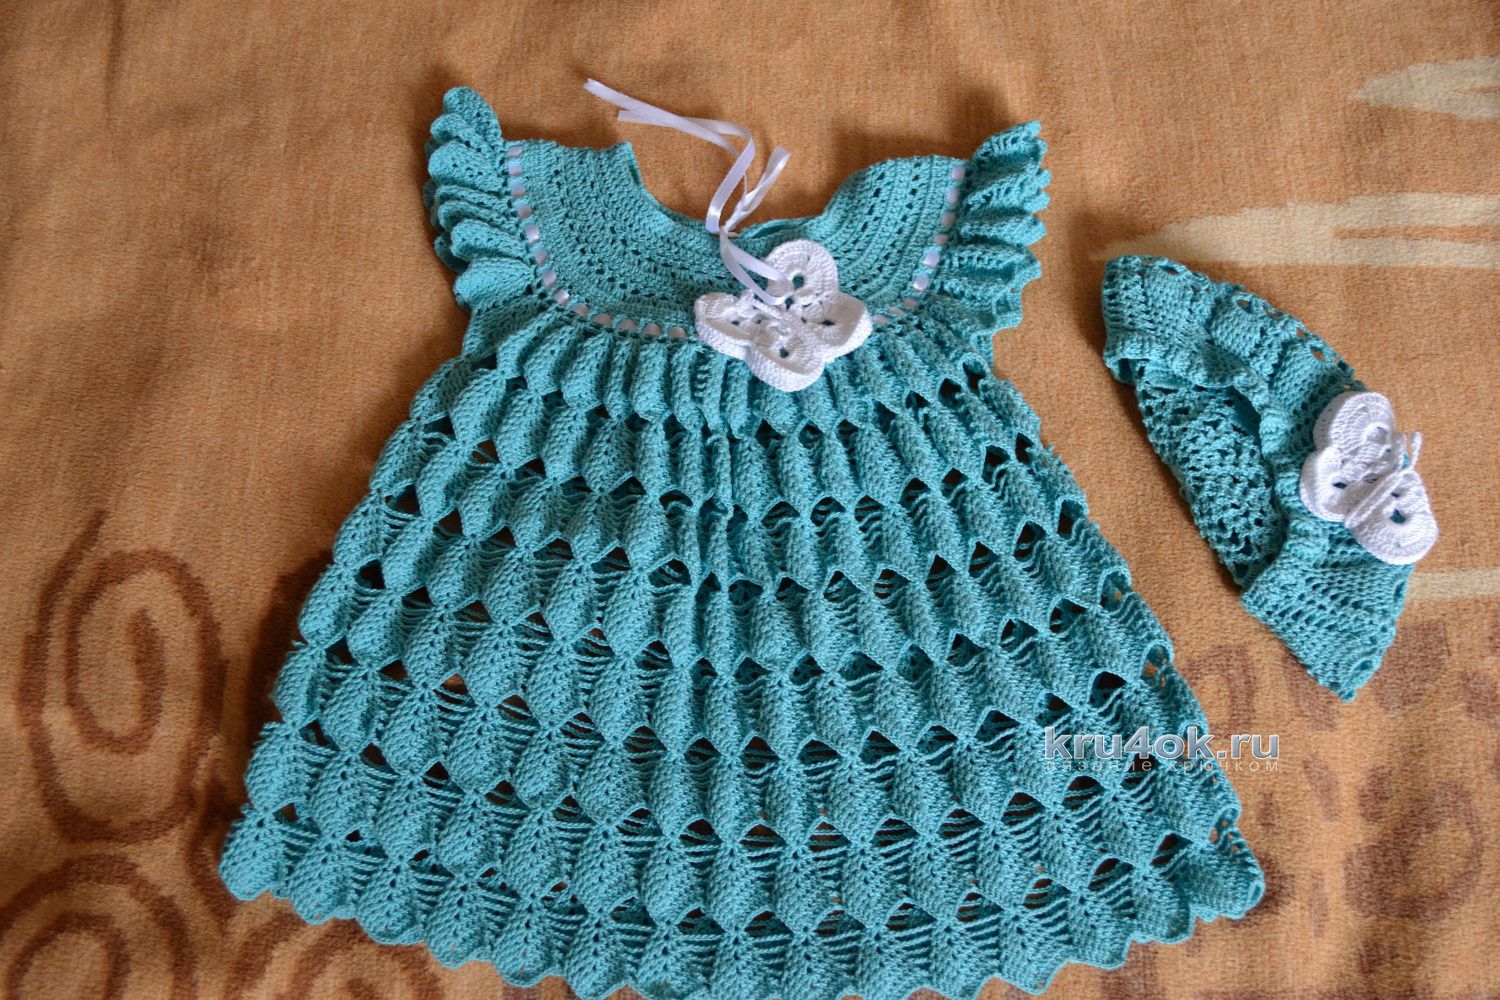 Baby dress sewing patterns free download